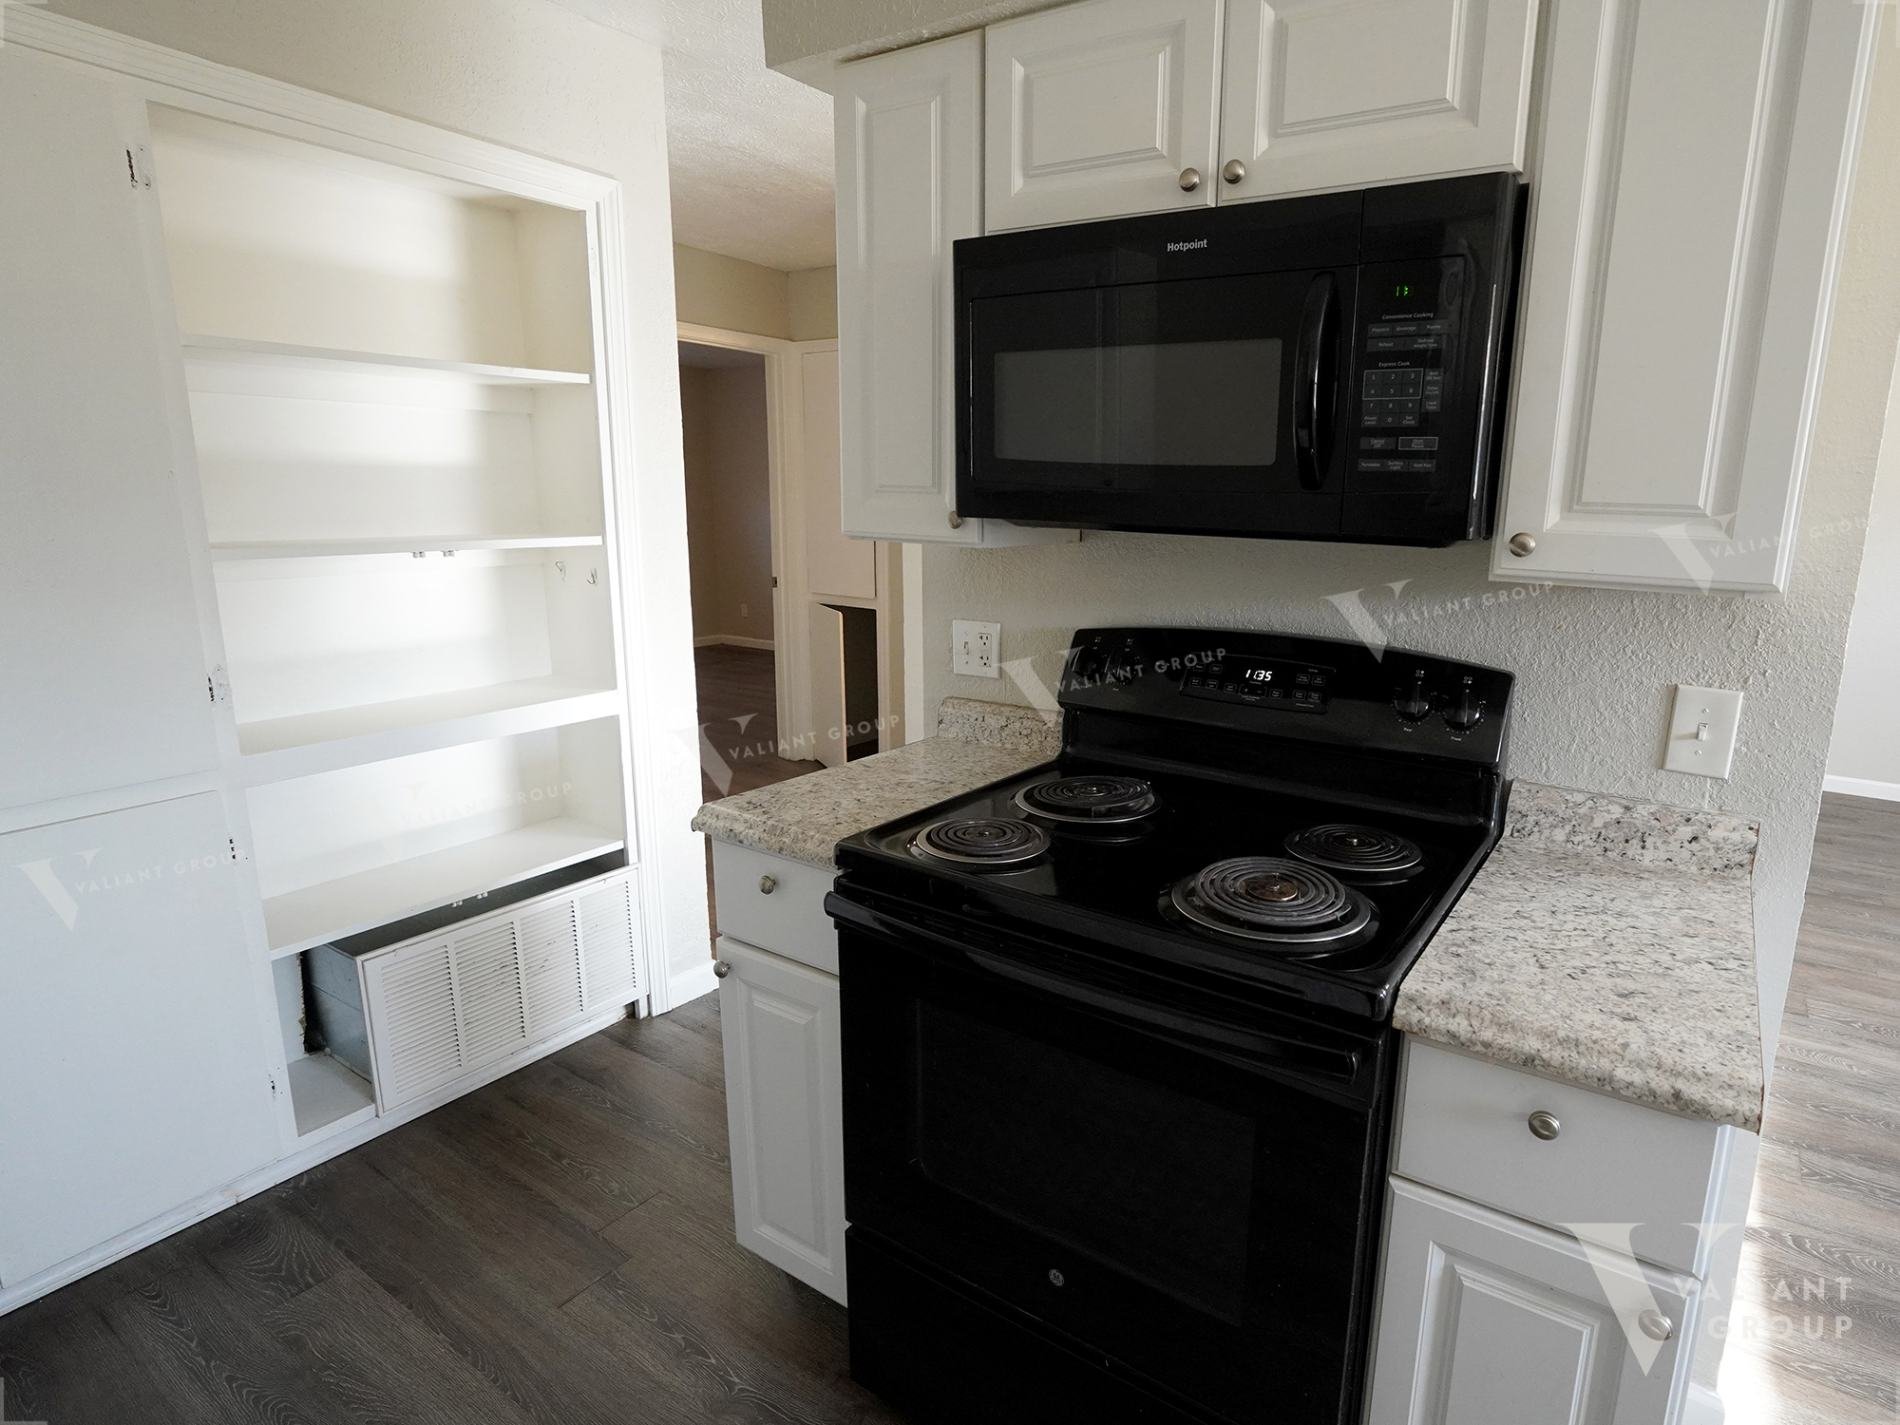 Apartment Rental Springfield MO - 2107 E Cherry Apt - 08 kitchen stove oven microwave.jpg